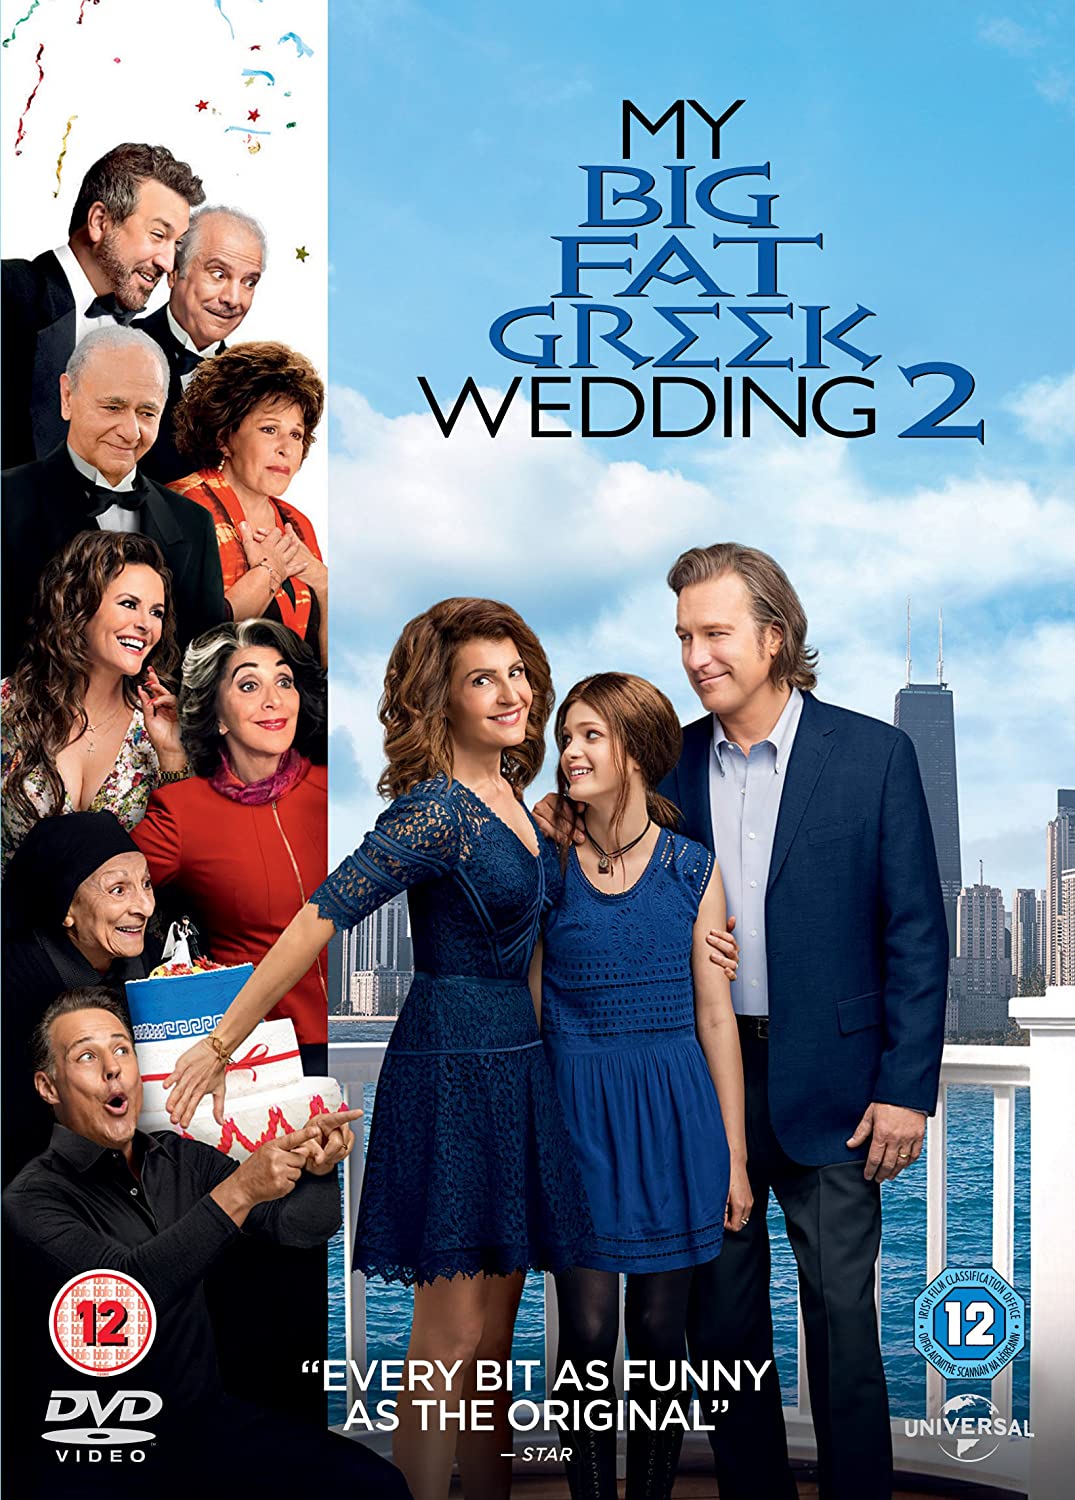 My Big Fat Greek Wedding 2 - Romance [2016] [DVD]